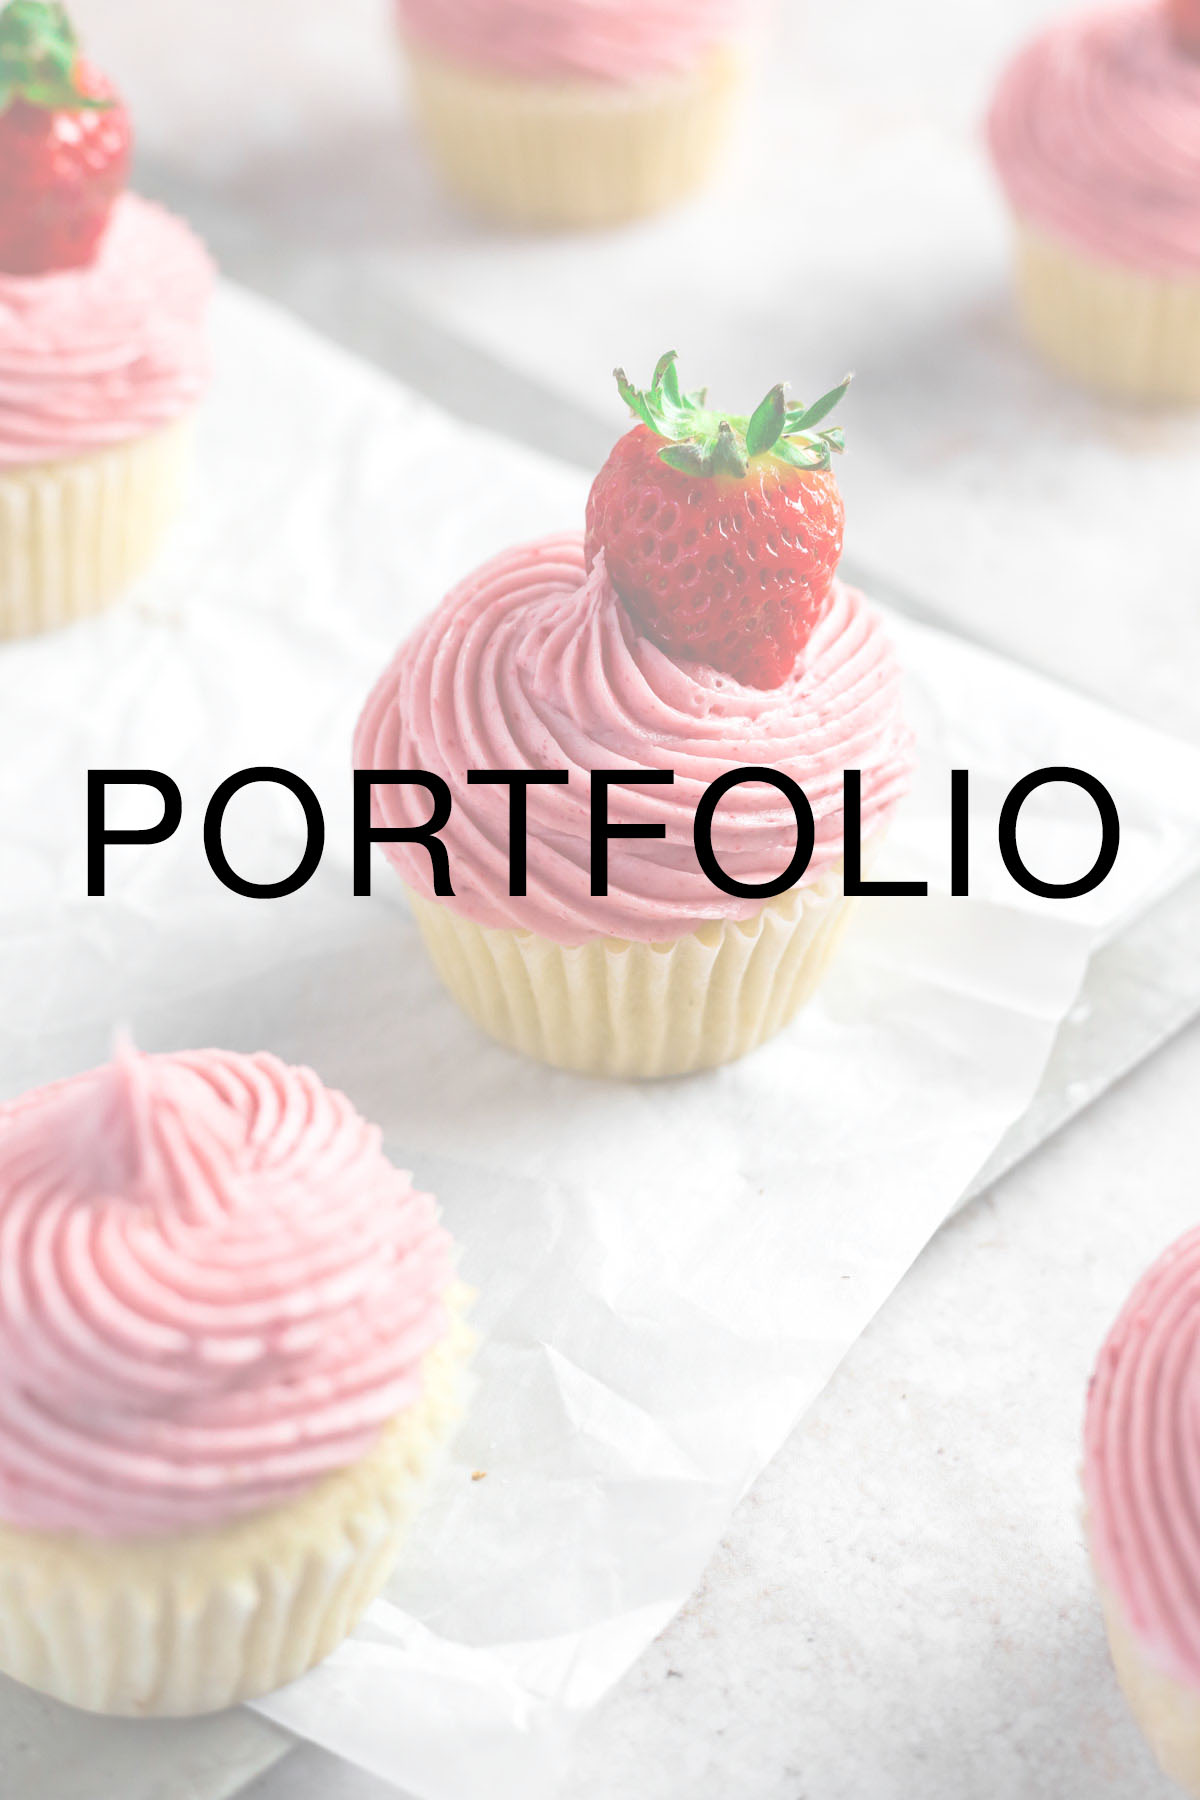 vegan strawberry cupcakes with "portfolio" text over the image.